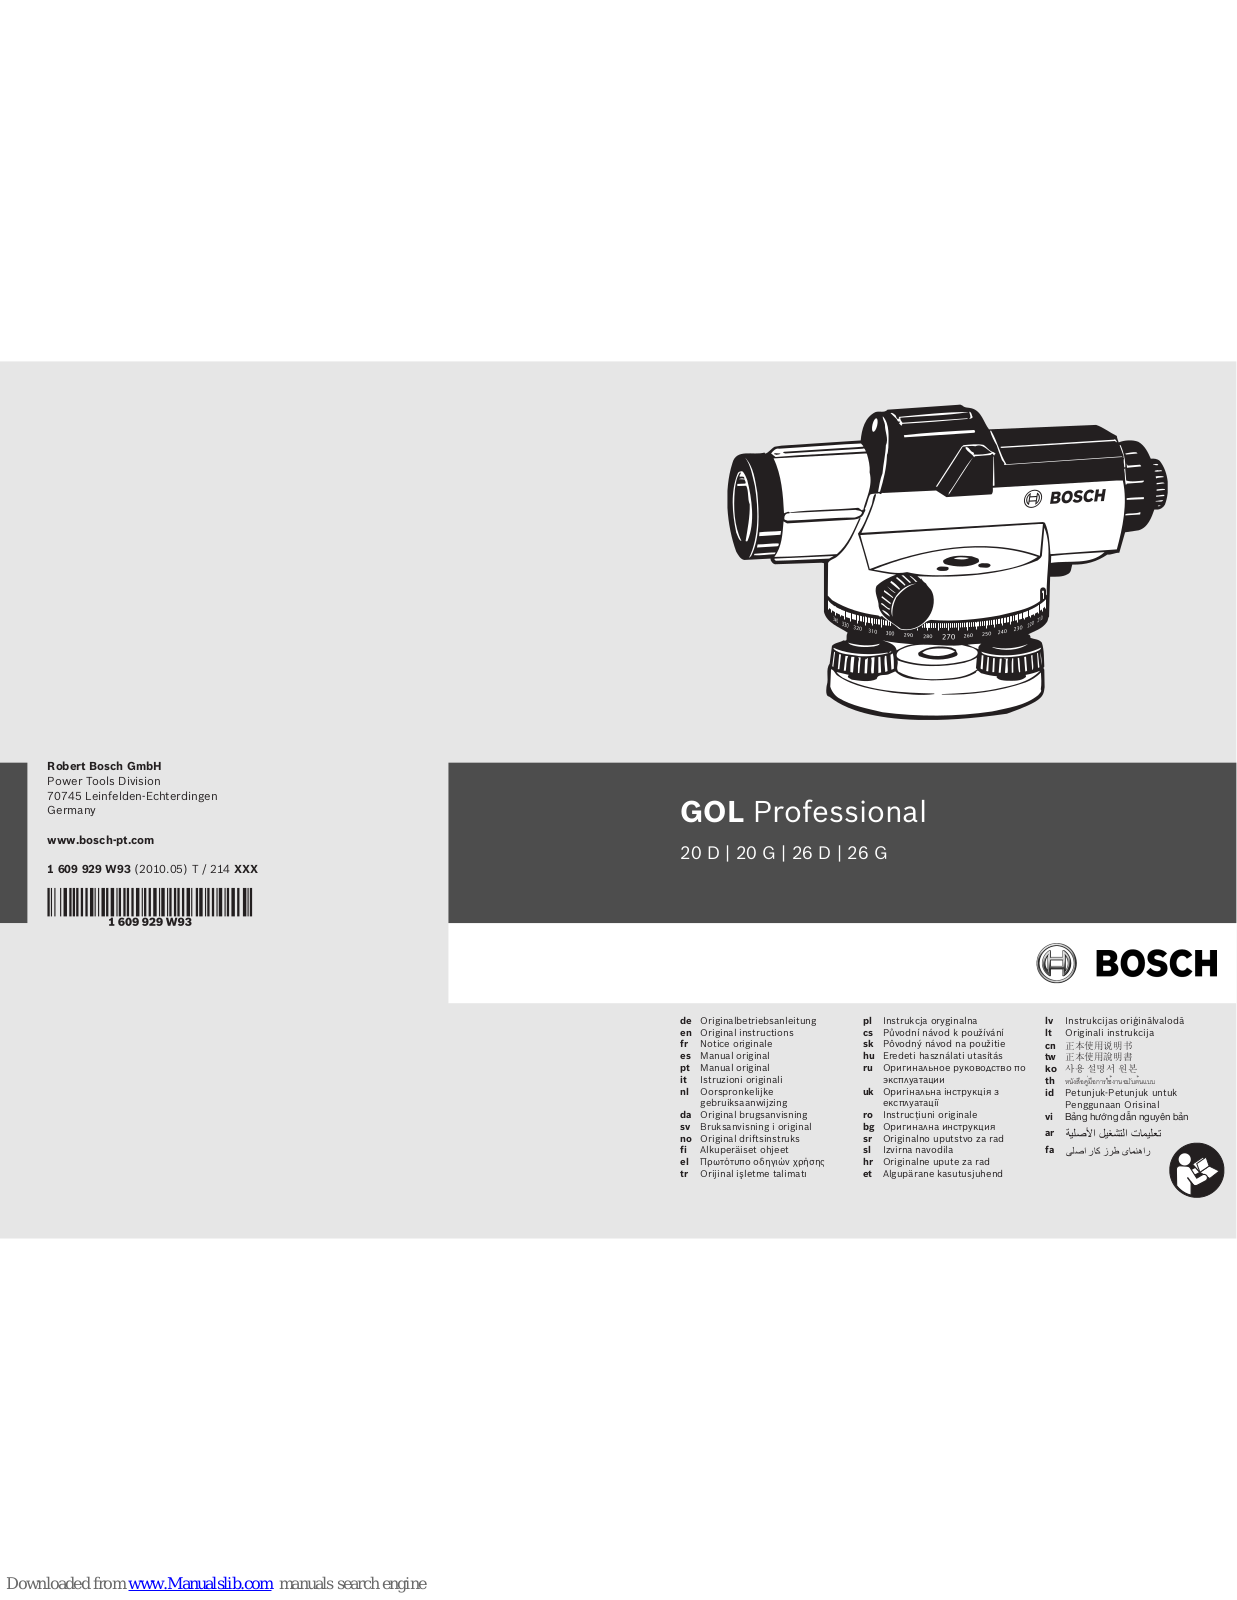 Bosch GOL Professional 20 D, GOL Professional 20 G, GOL Professional 26 D, GOL Professional 26 G Original Instructions Manual